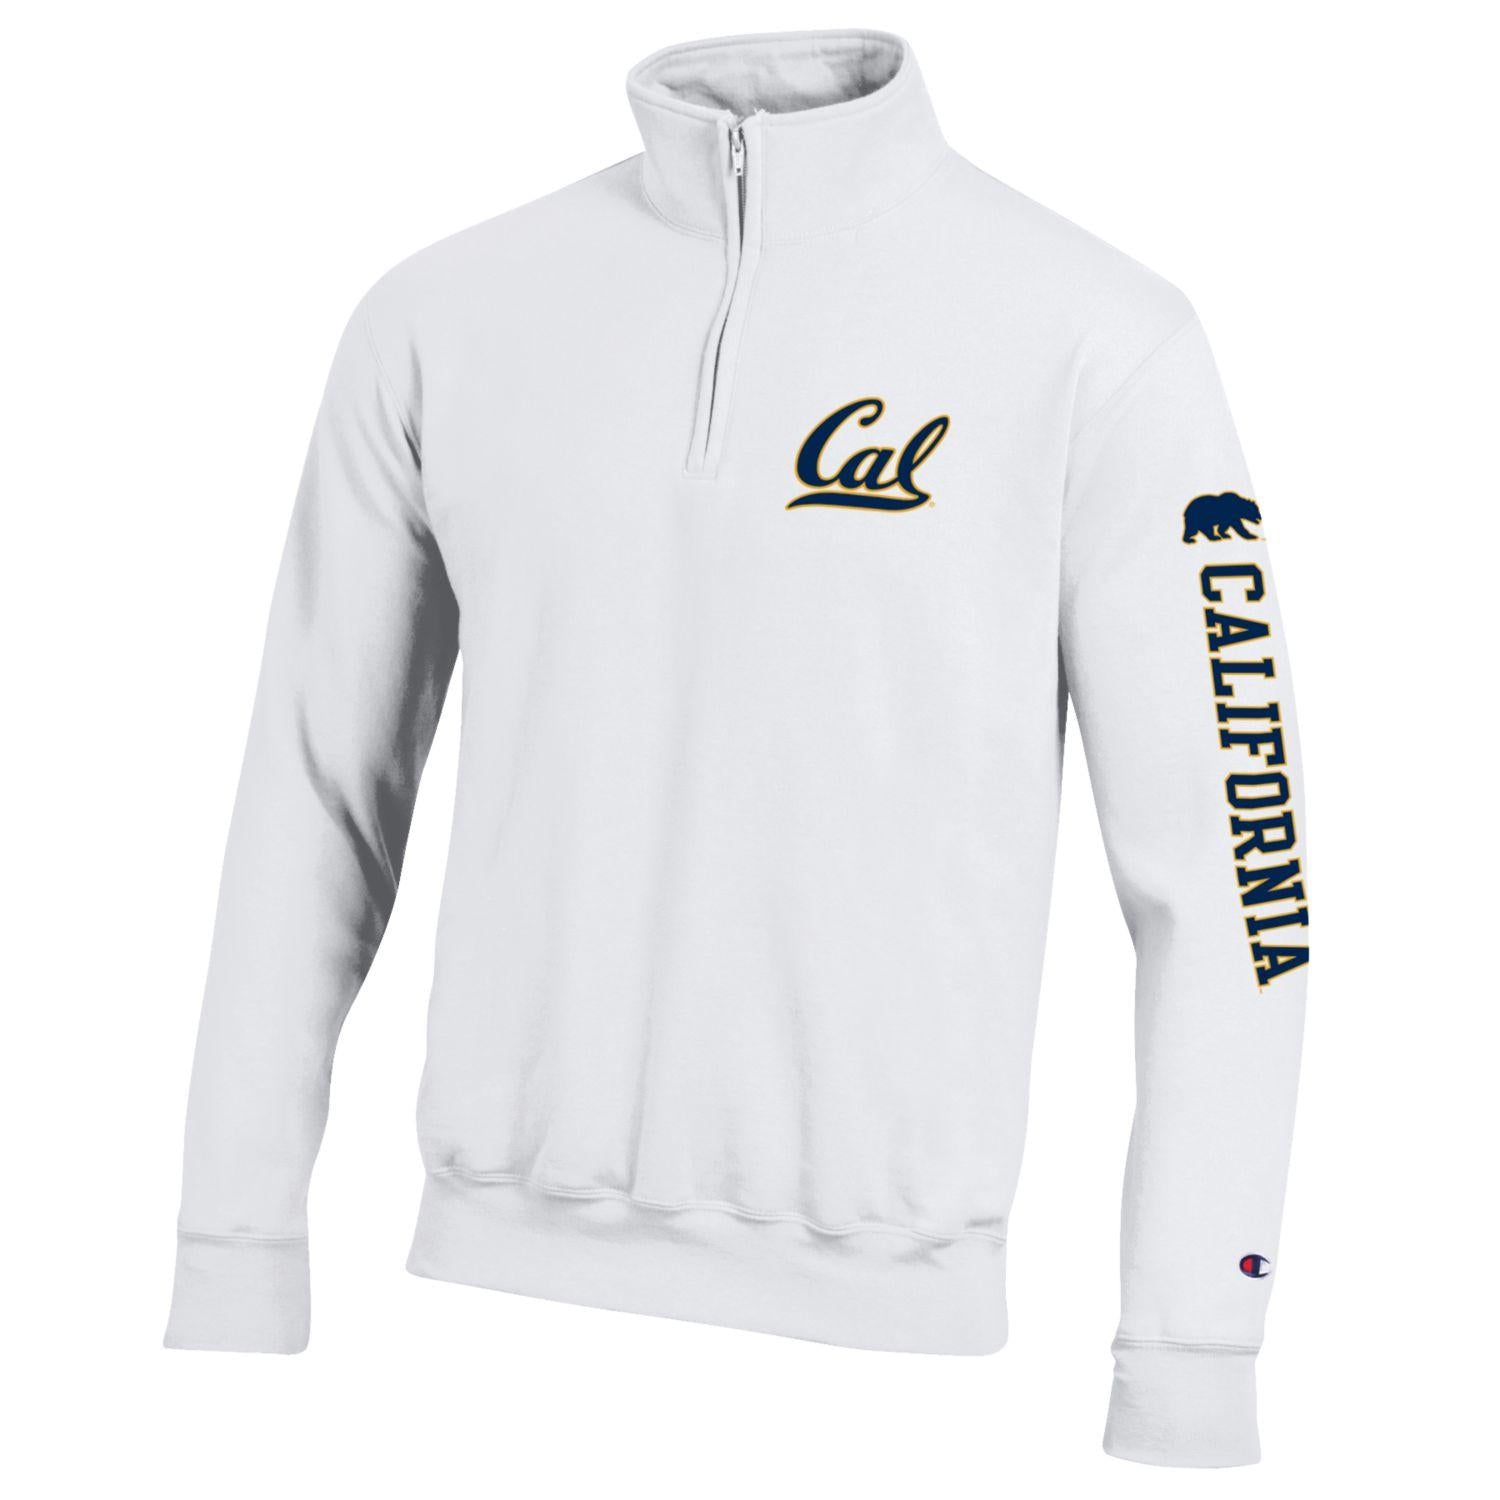 U.C. Berkeley Cal Champion 1/4" Zip sweatshirt-White-Shop College Wear